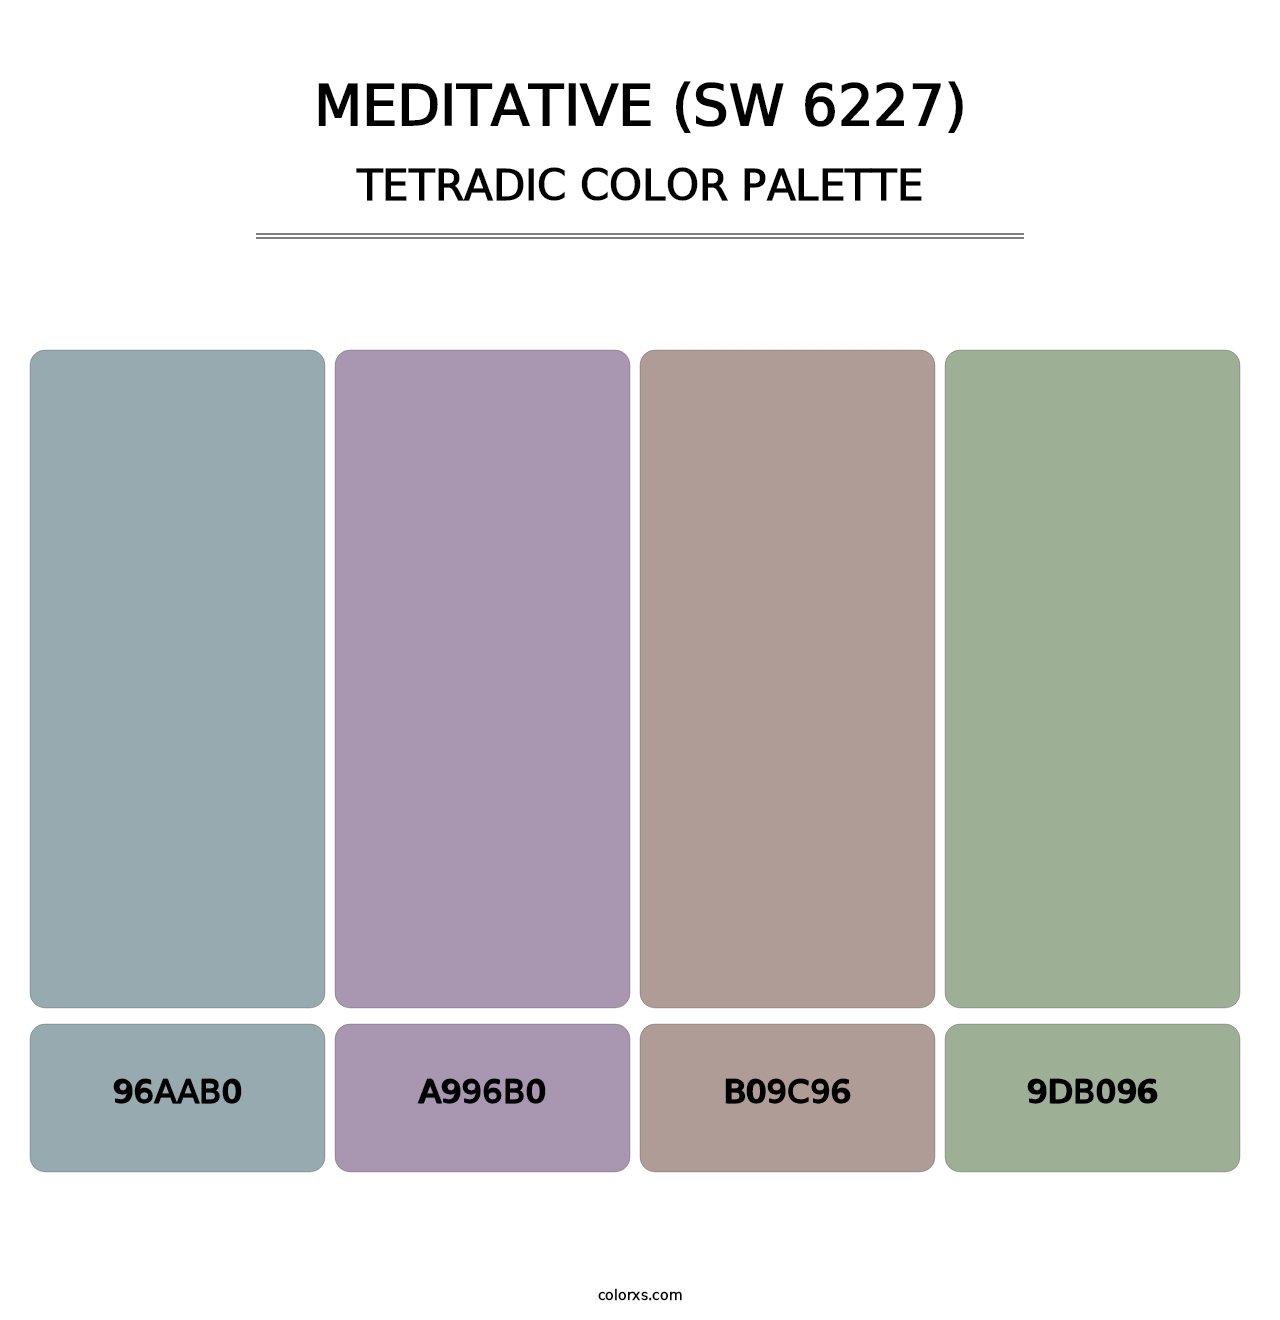 Meditative (SW 6227) - Tetradic Color Palette